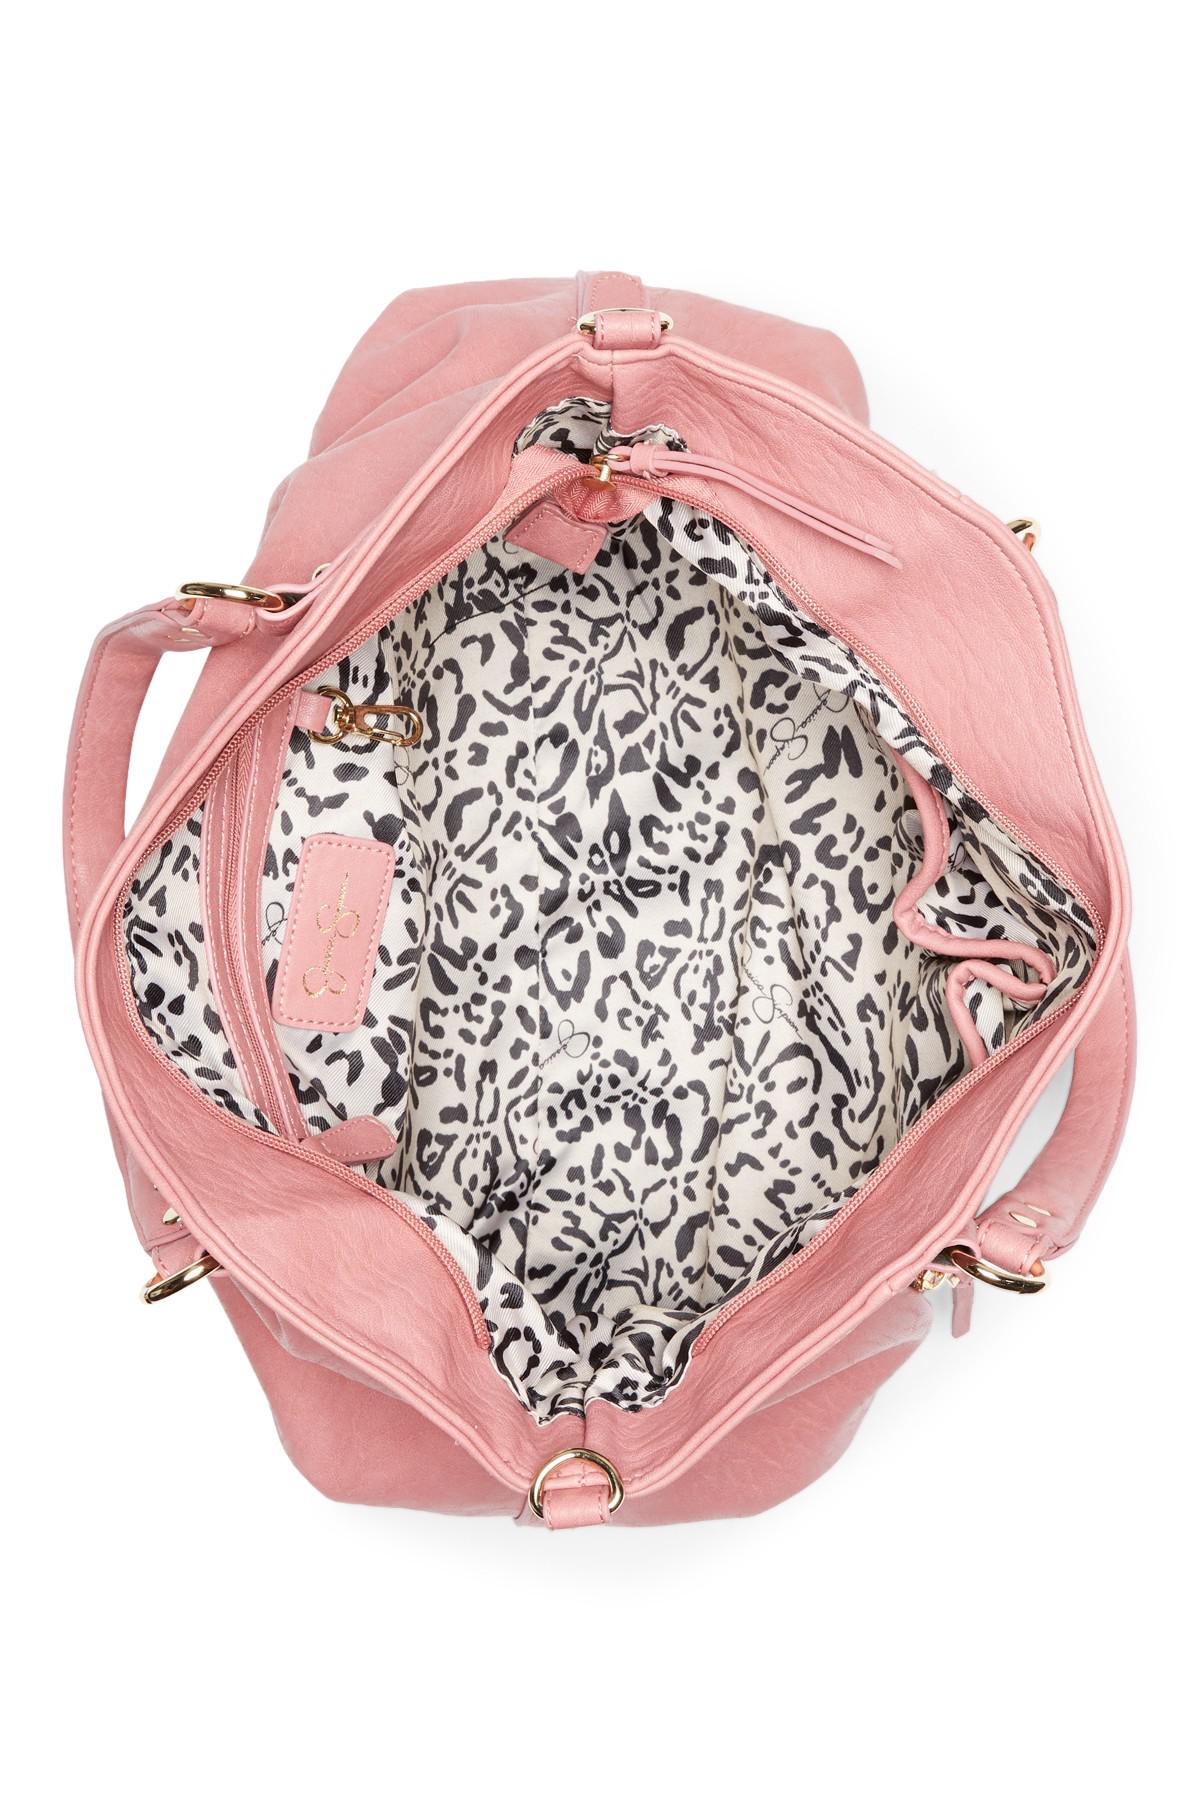 Jessica Simpson Pink Crossbody Shoulderbag Handbag  Jessica simpson bags,  Shoulder bag, Handbag shopping